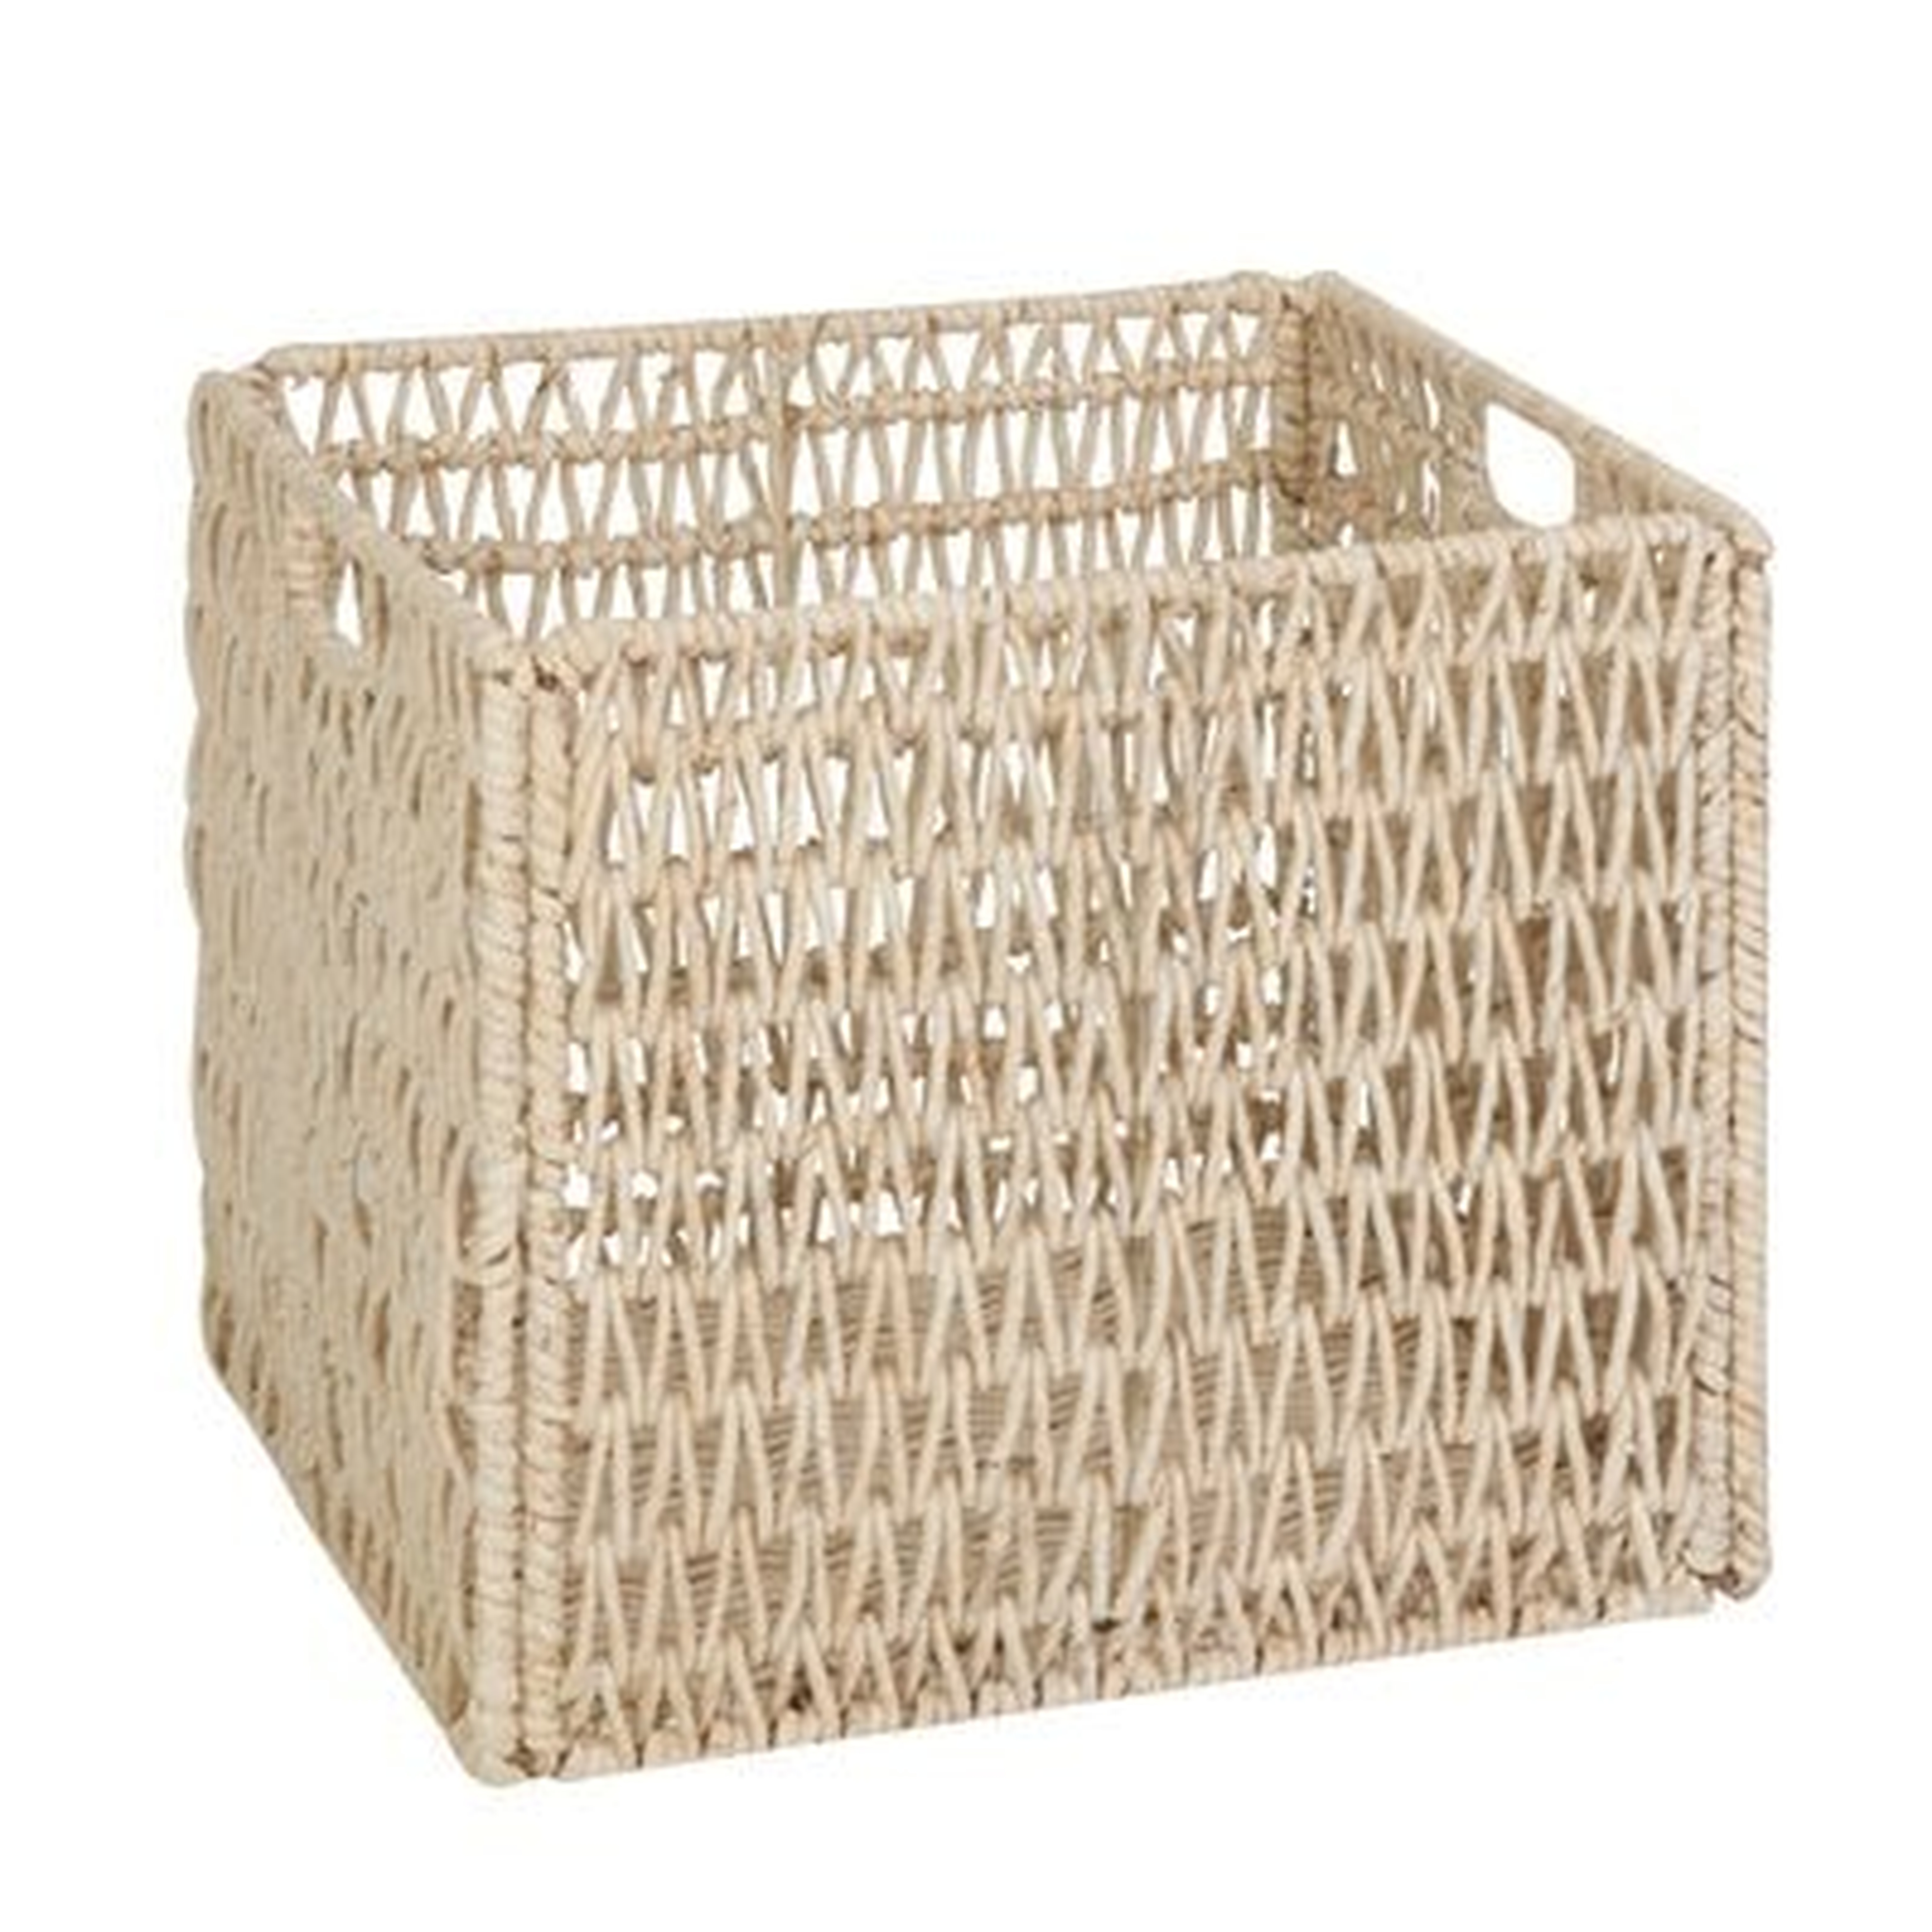 Storage Wicker Basket - Wayfair